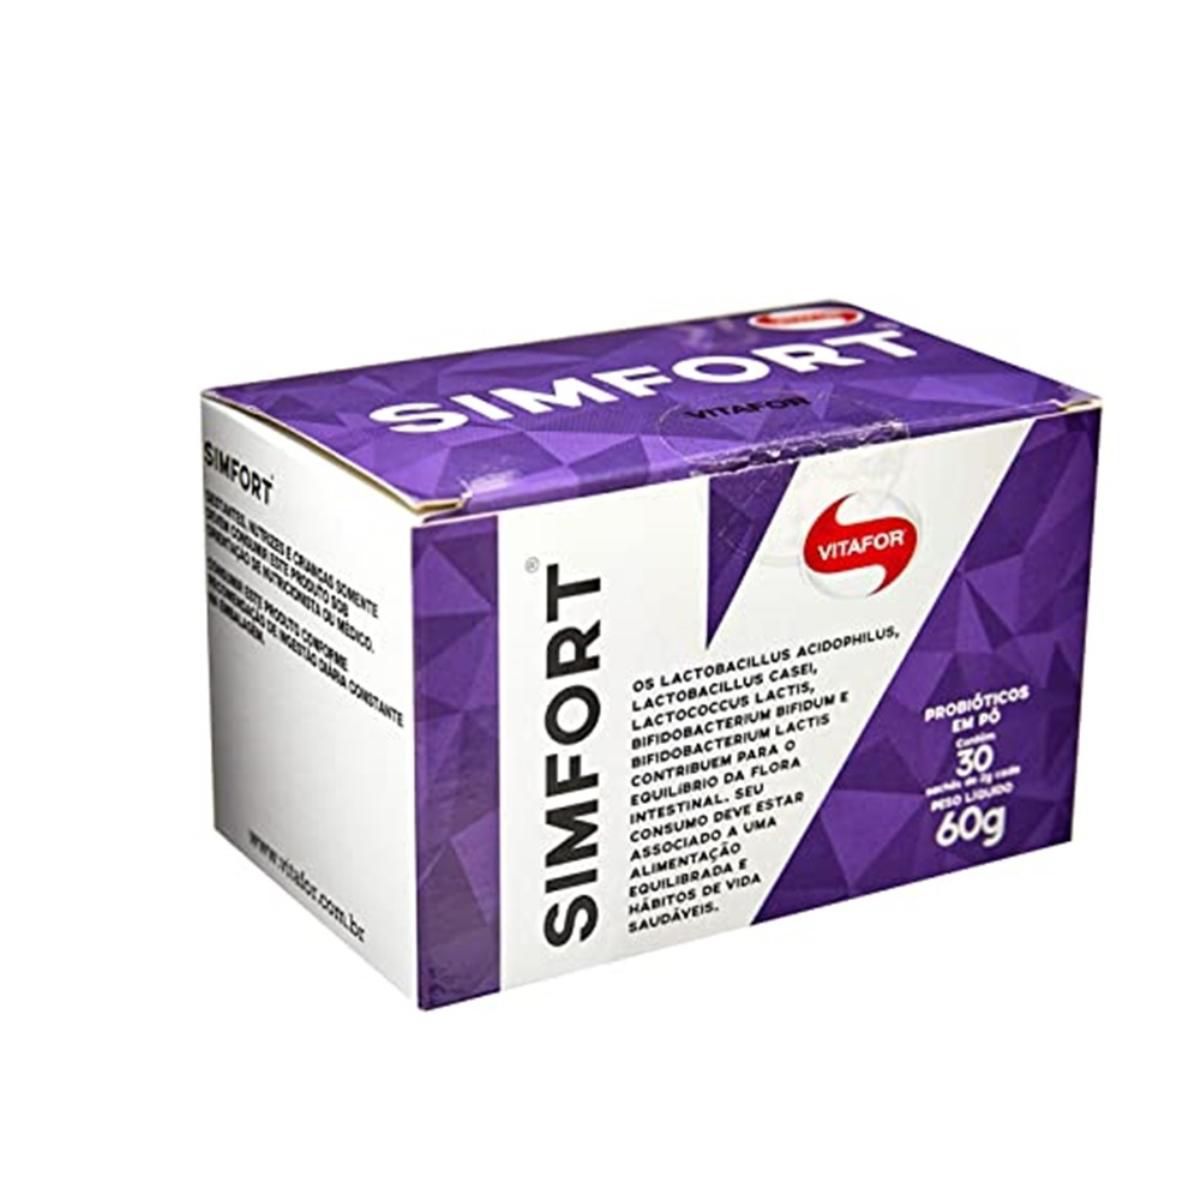 SIMFORT - 10 SACHÊS - VITAFOR na Nutri Fast Shop